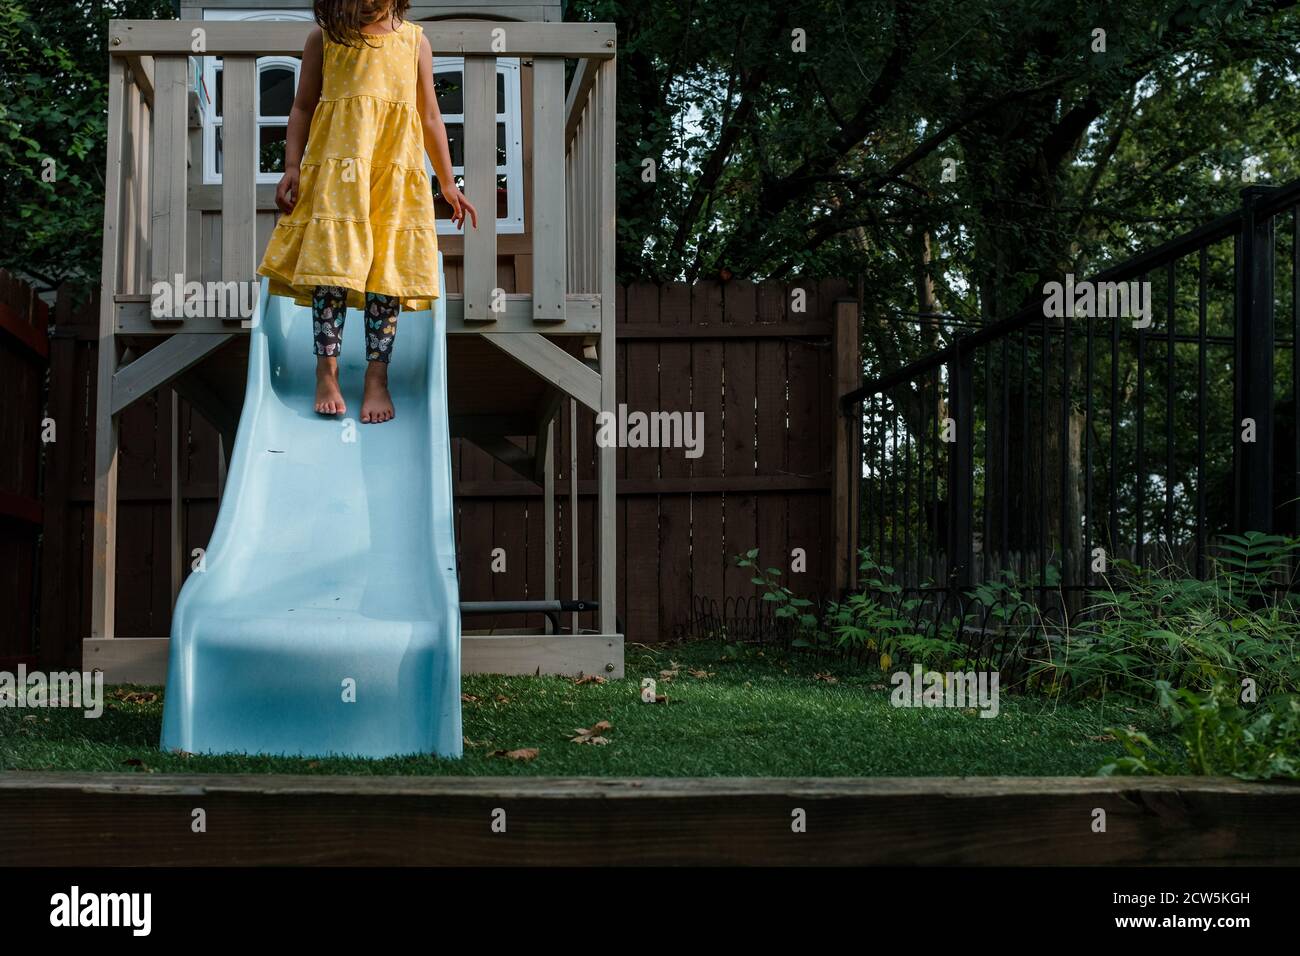 Little girl in yellow dress standing on blue slide Stock Photo